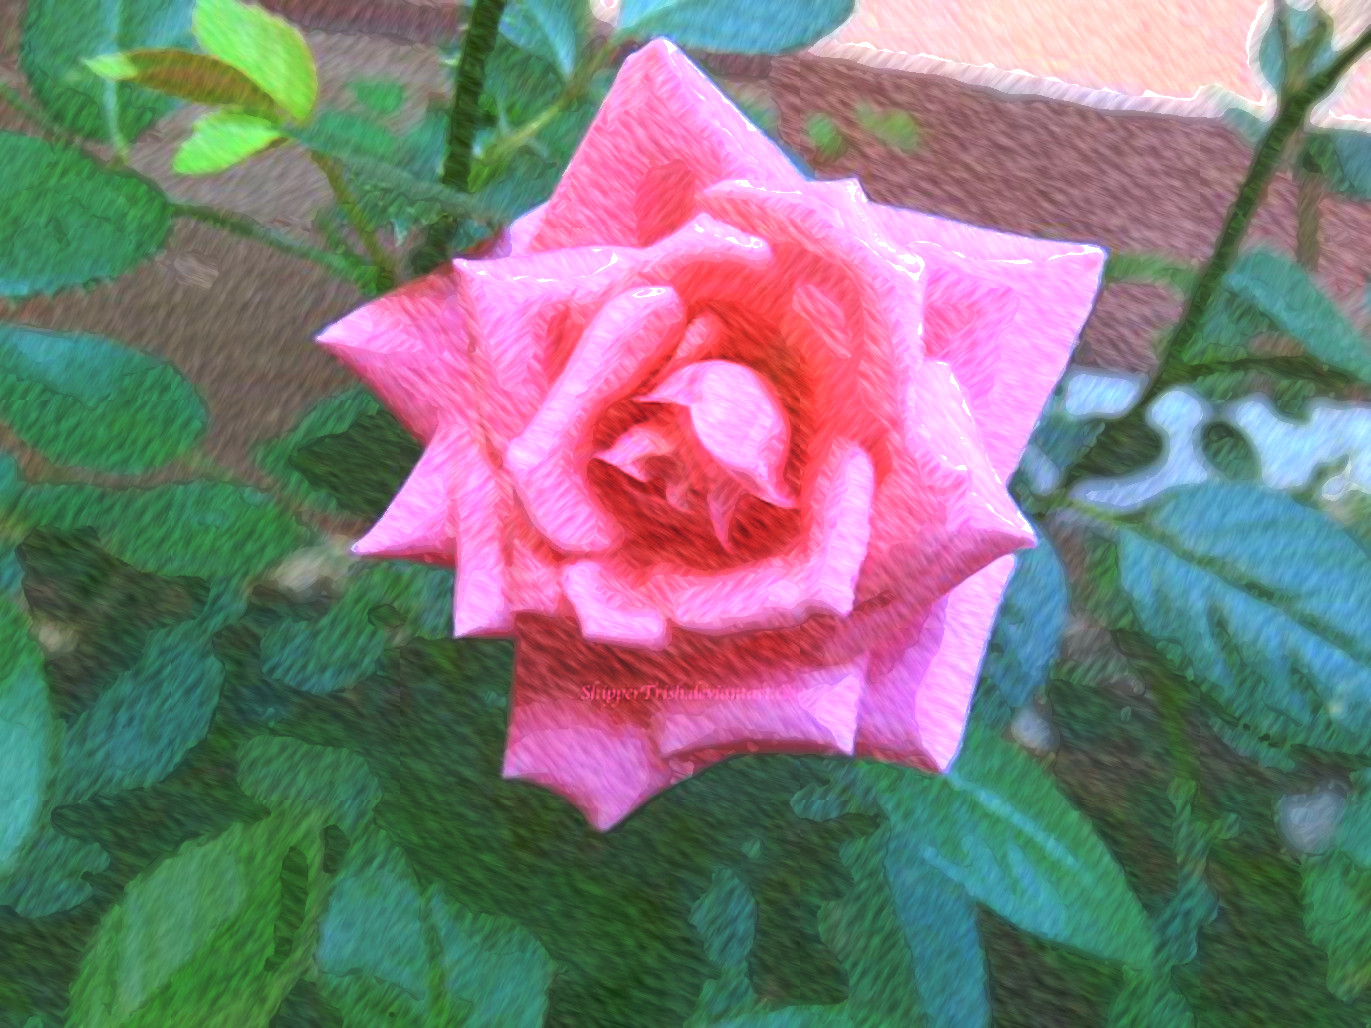 pink_rose_by_shippertrish_ddx1gds_DN_FreePainting_Stroke_65_Issa.jpg